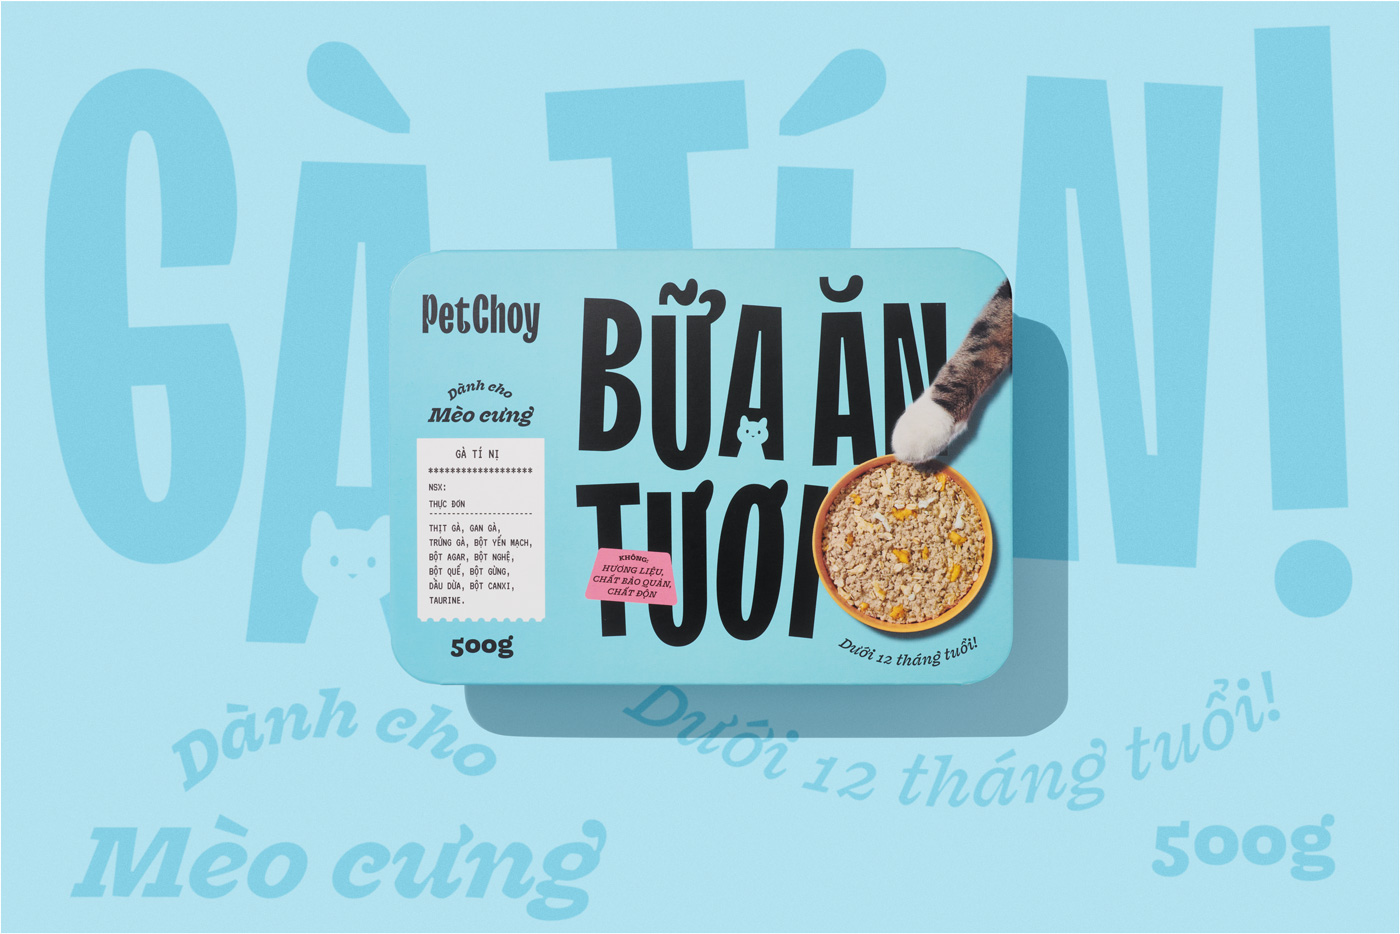 Vietnamese PetChoy Rebranding  and Packaging Design by M – N Associates